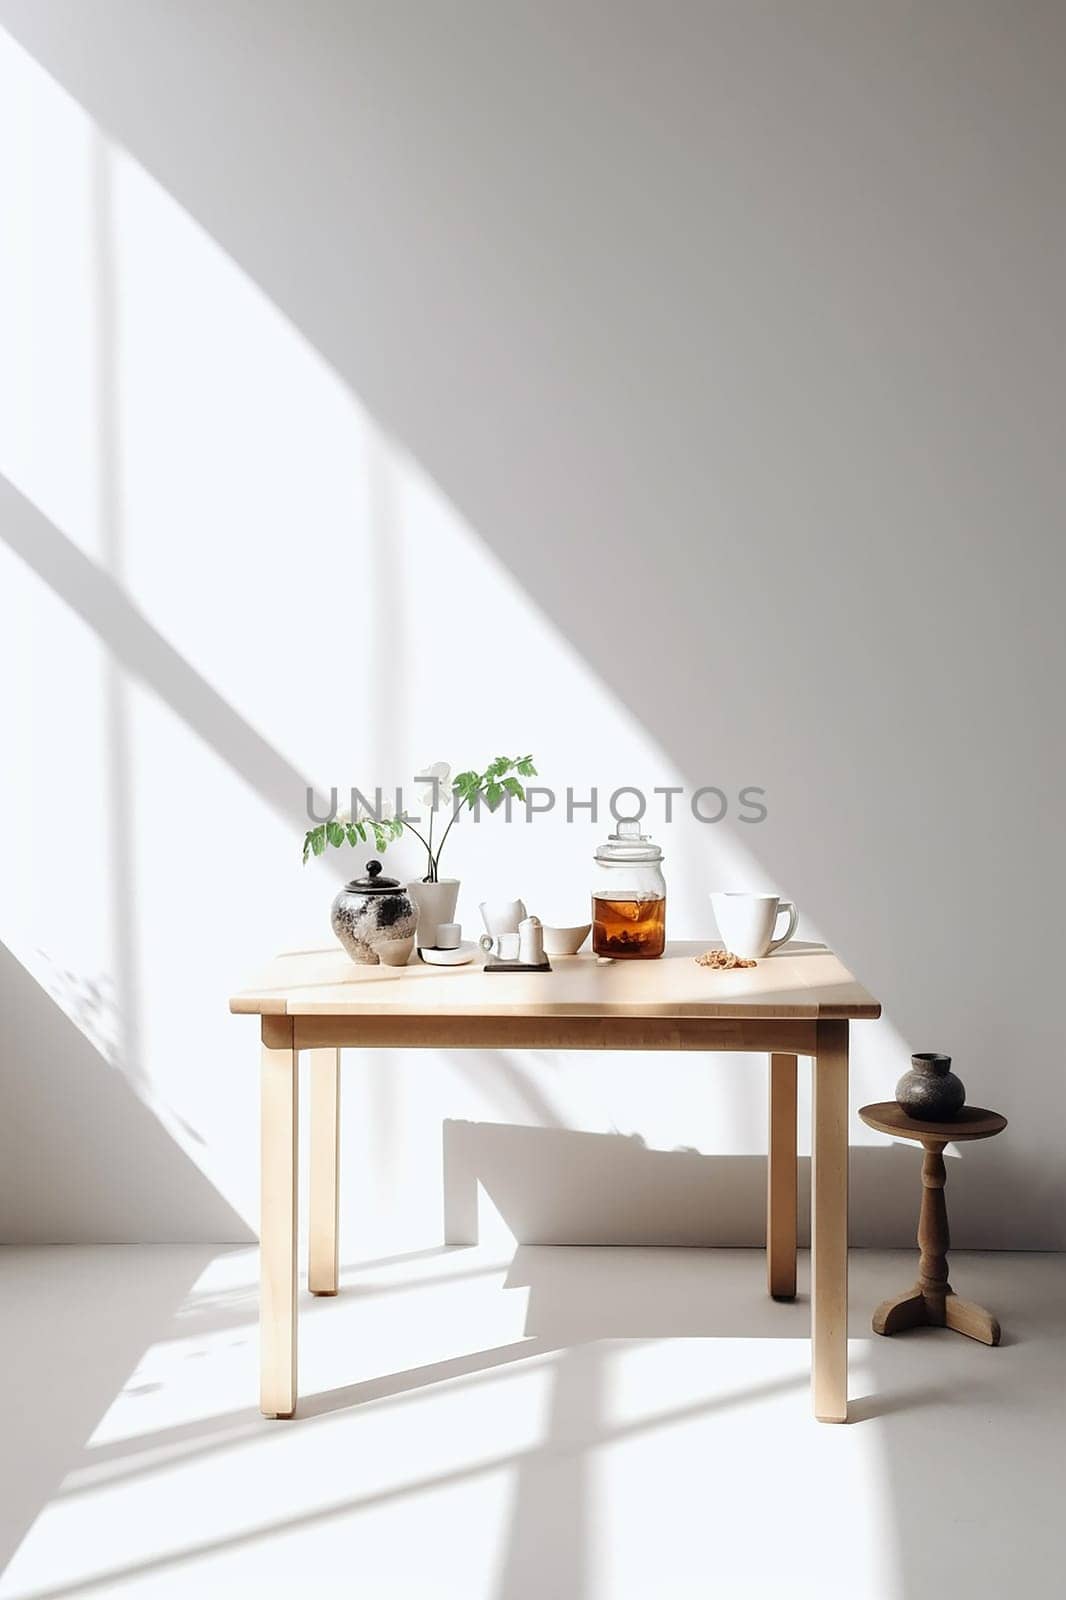 A minimalist tea setup on a wooden table with sunlight casting shadows.